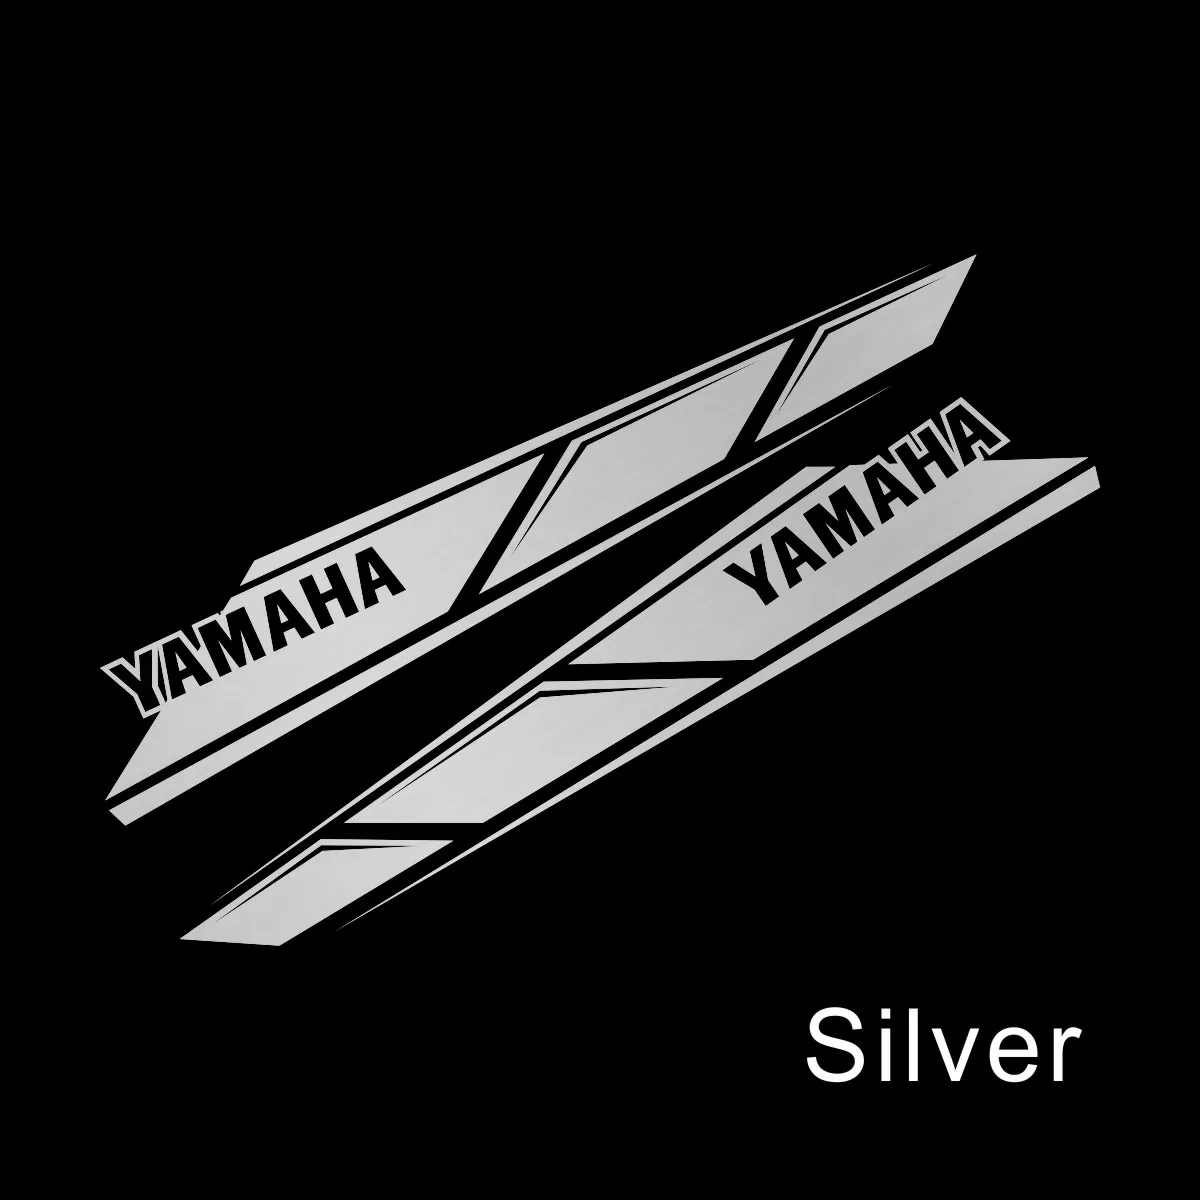 Vinyl Reflective Yamaha Sticker Motorcycle Logo Decals Yzf R1 R3 R6 Nmax  Xmax Tmax Fz1 Fz6 FZ8 Tracer Stickers Decal